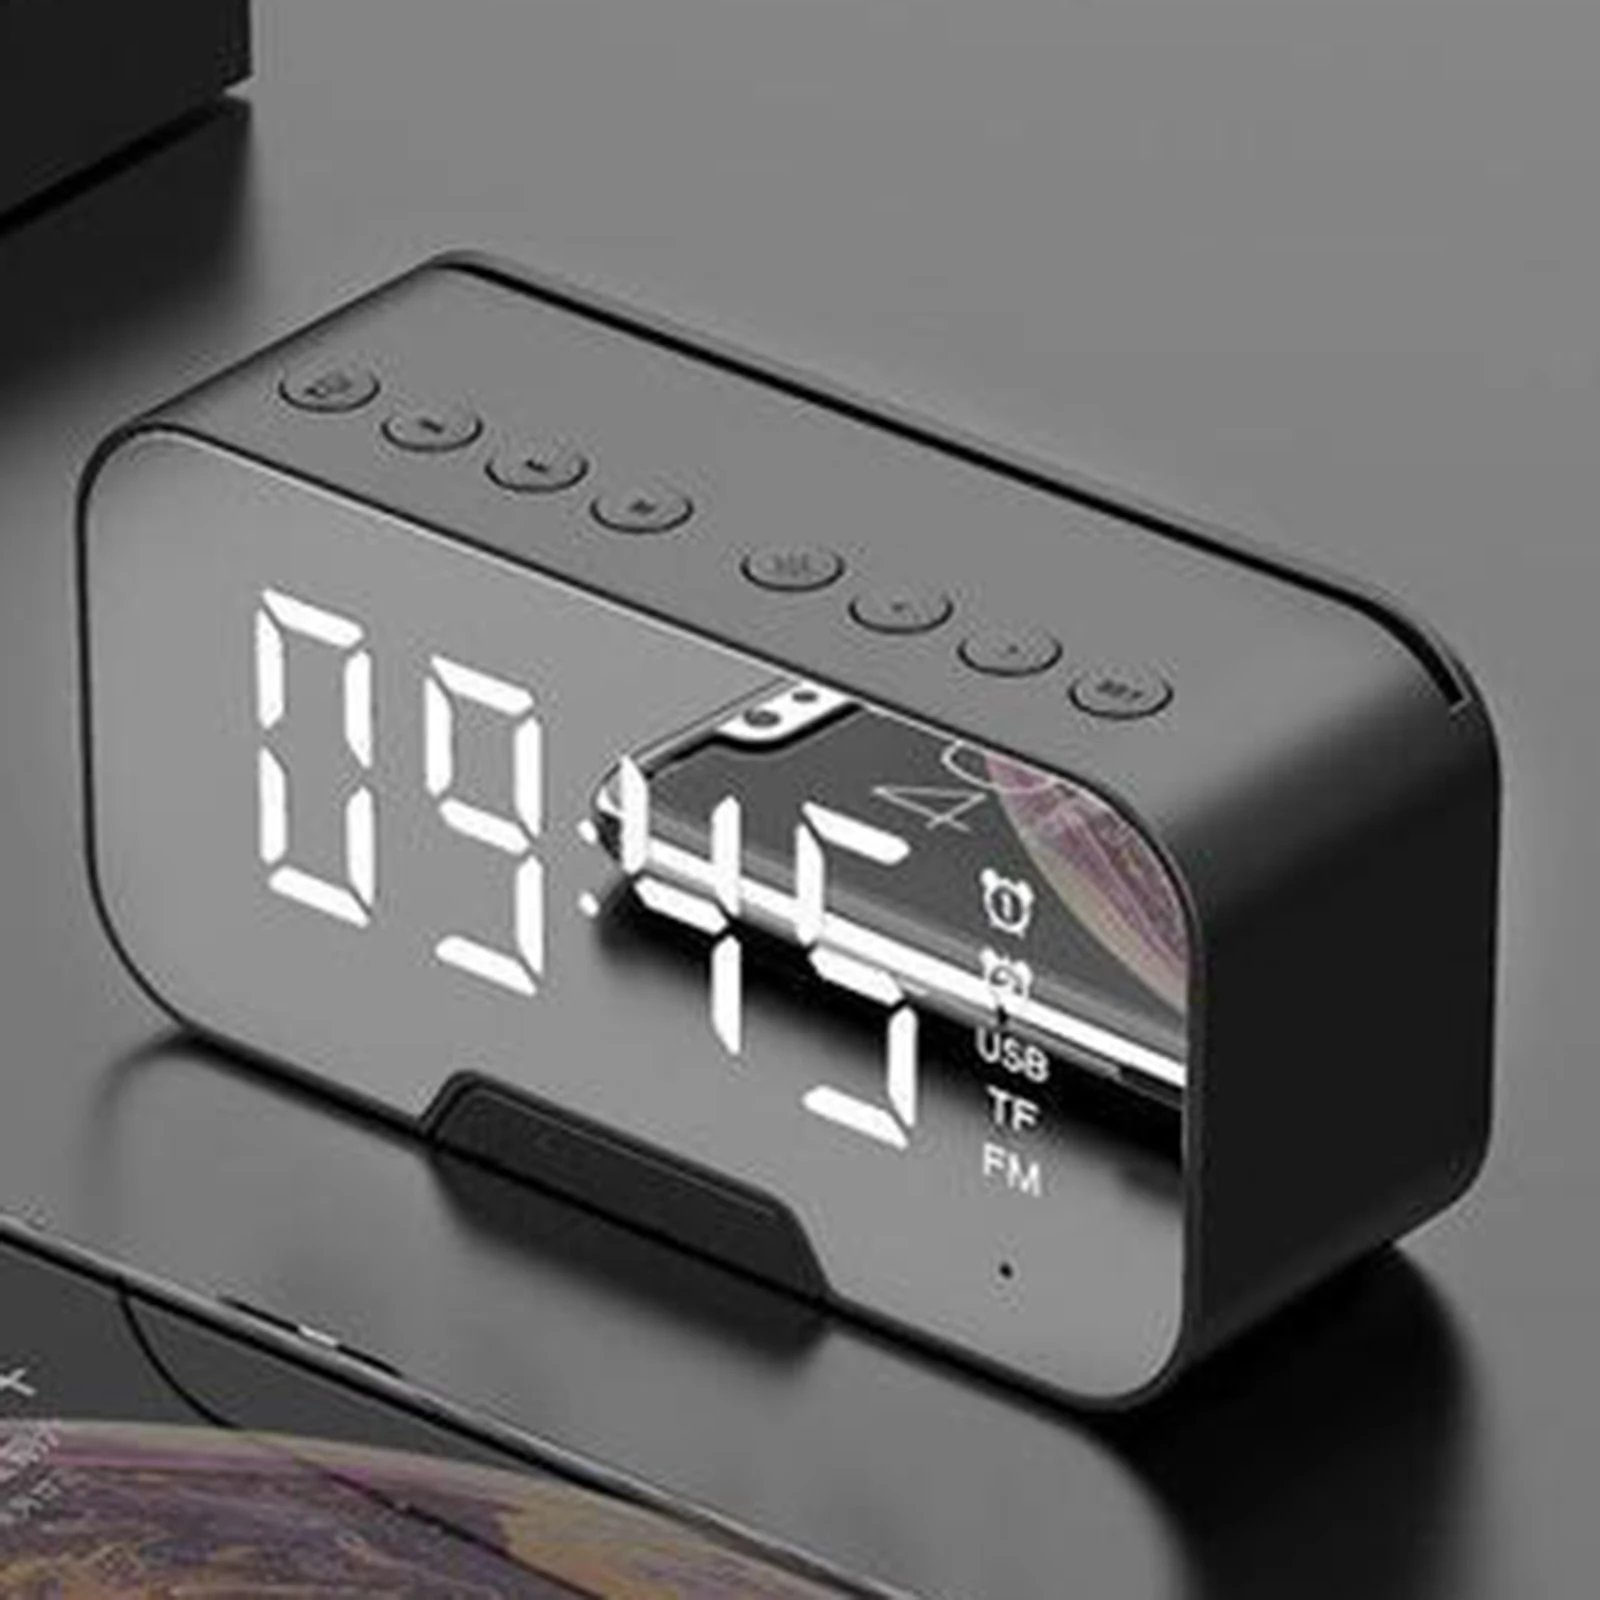 Digital Alarm Clock, Electronic LED Time Display, Alarm Settings, Temperature Detect, Electric Clocks for Bedroom, Bedside